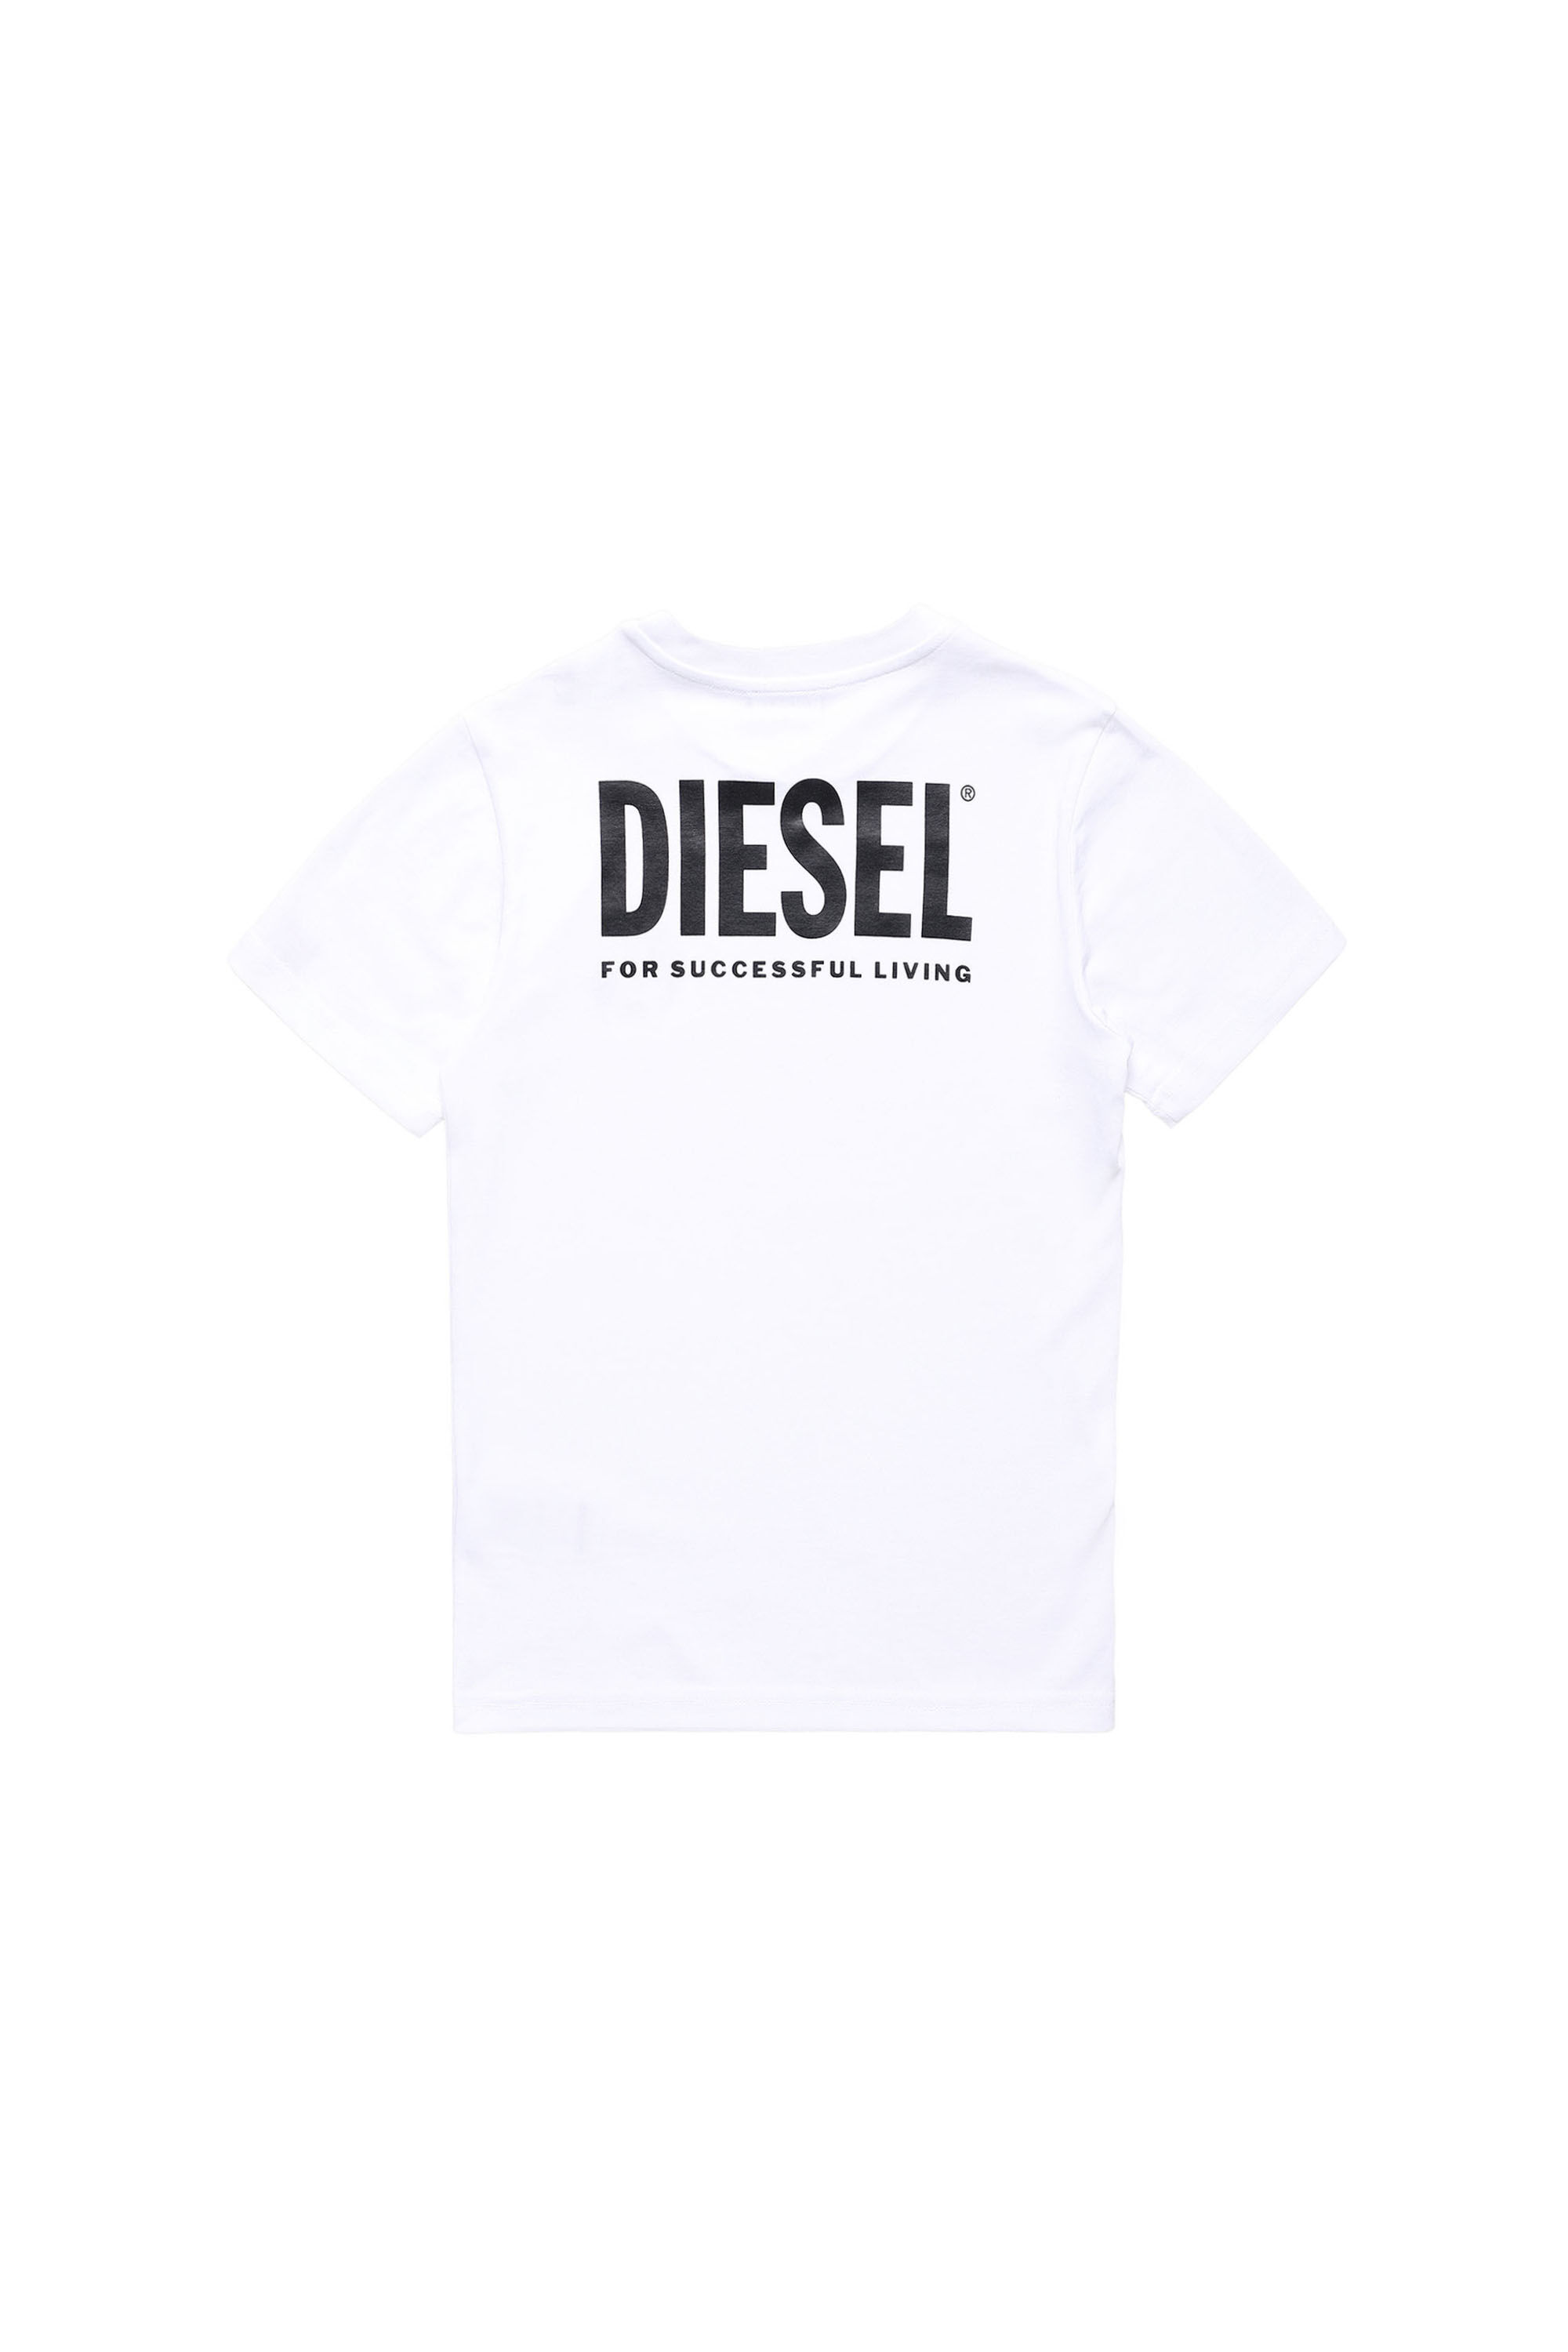 Diesel - LR TDIEGO VIC, Weiß - Image 2